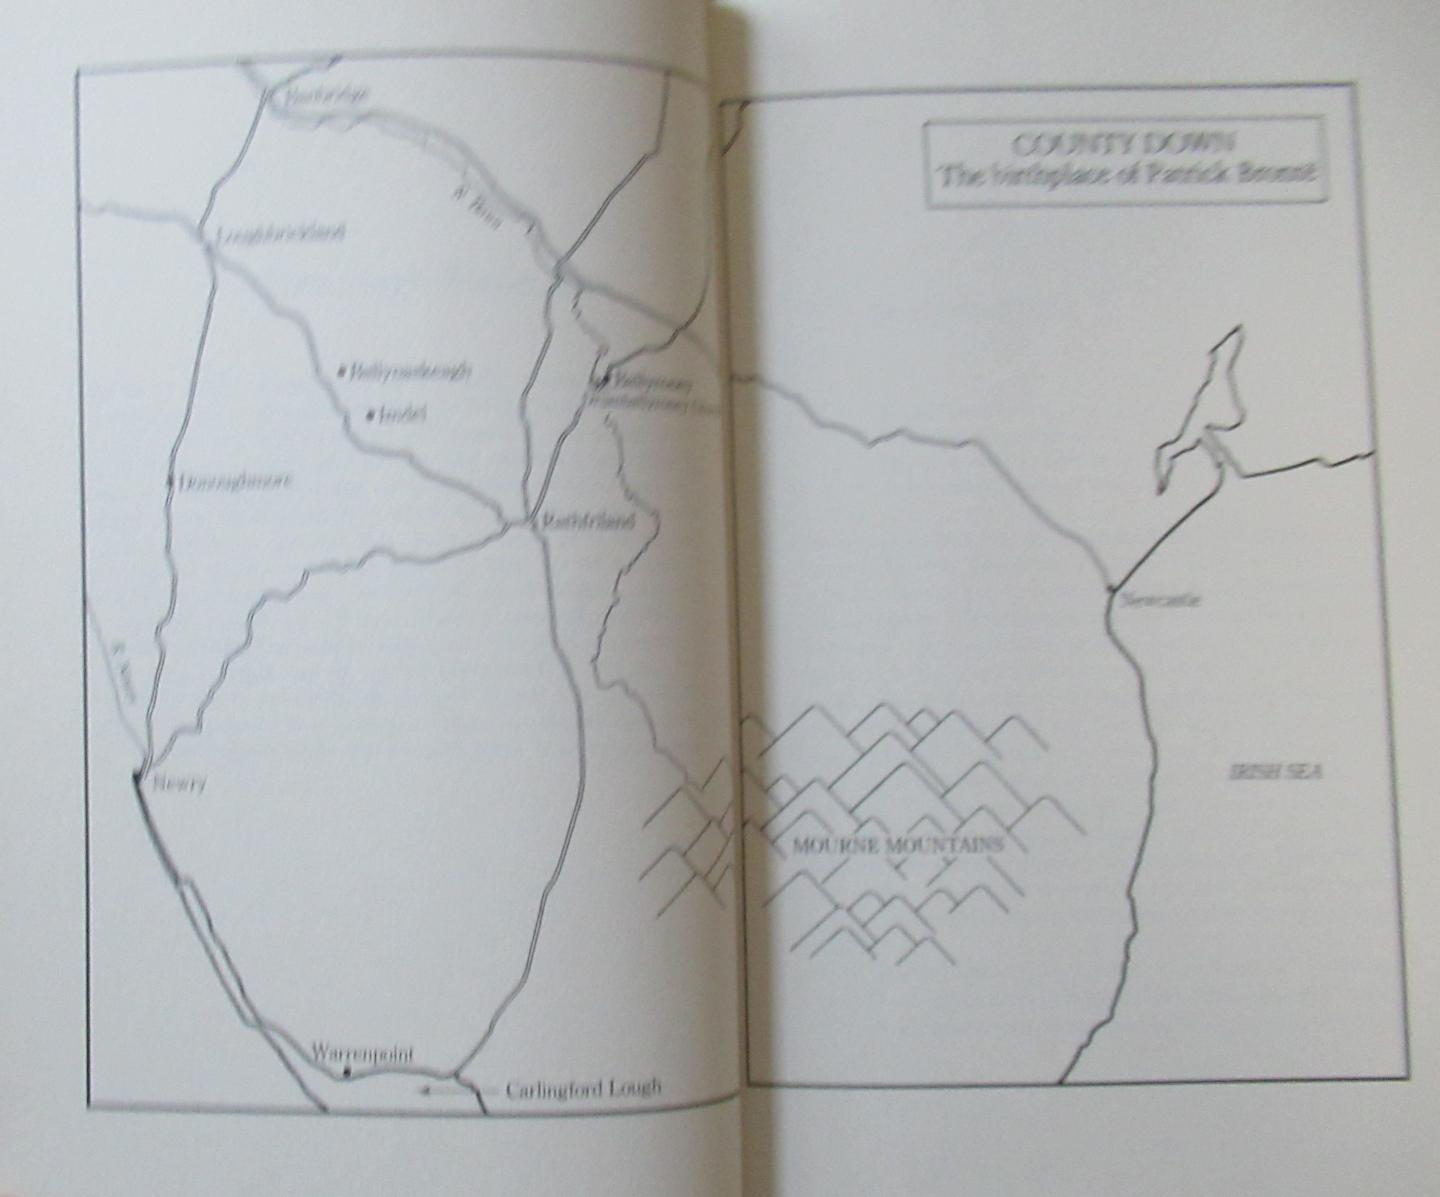 Canon, John - The road to Haworth. The story of the Brontës Irish Ancestry